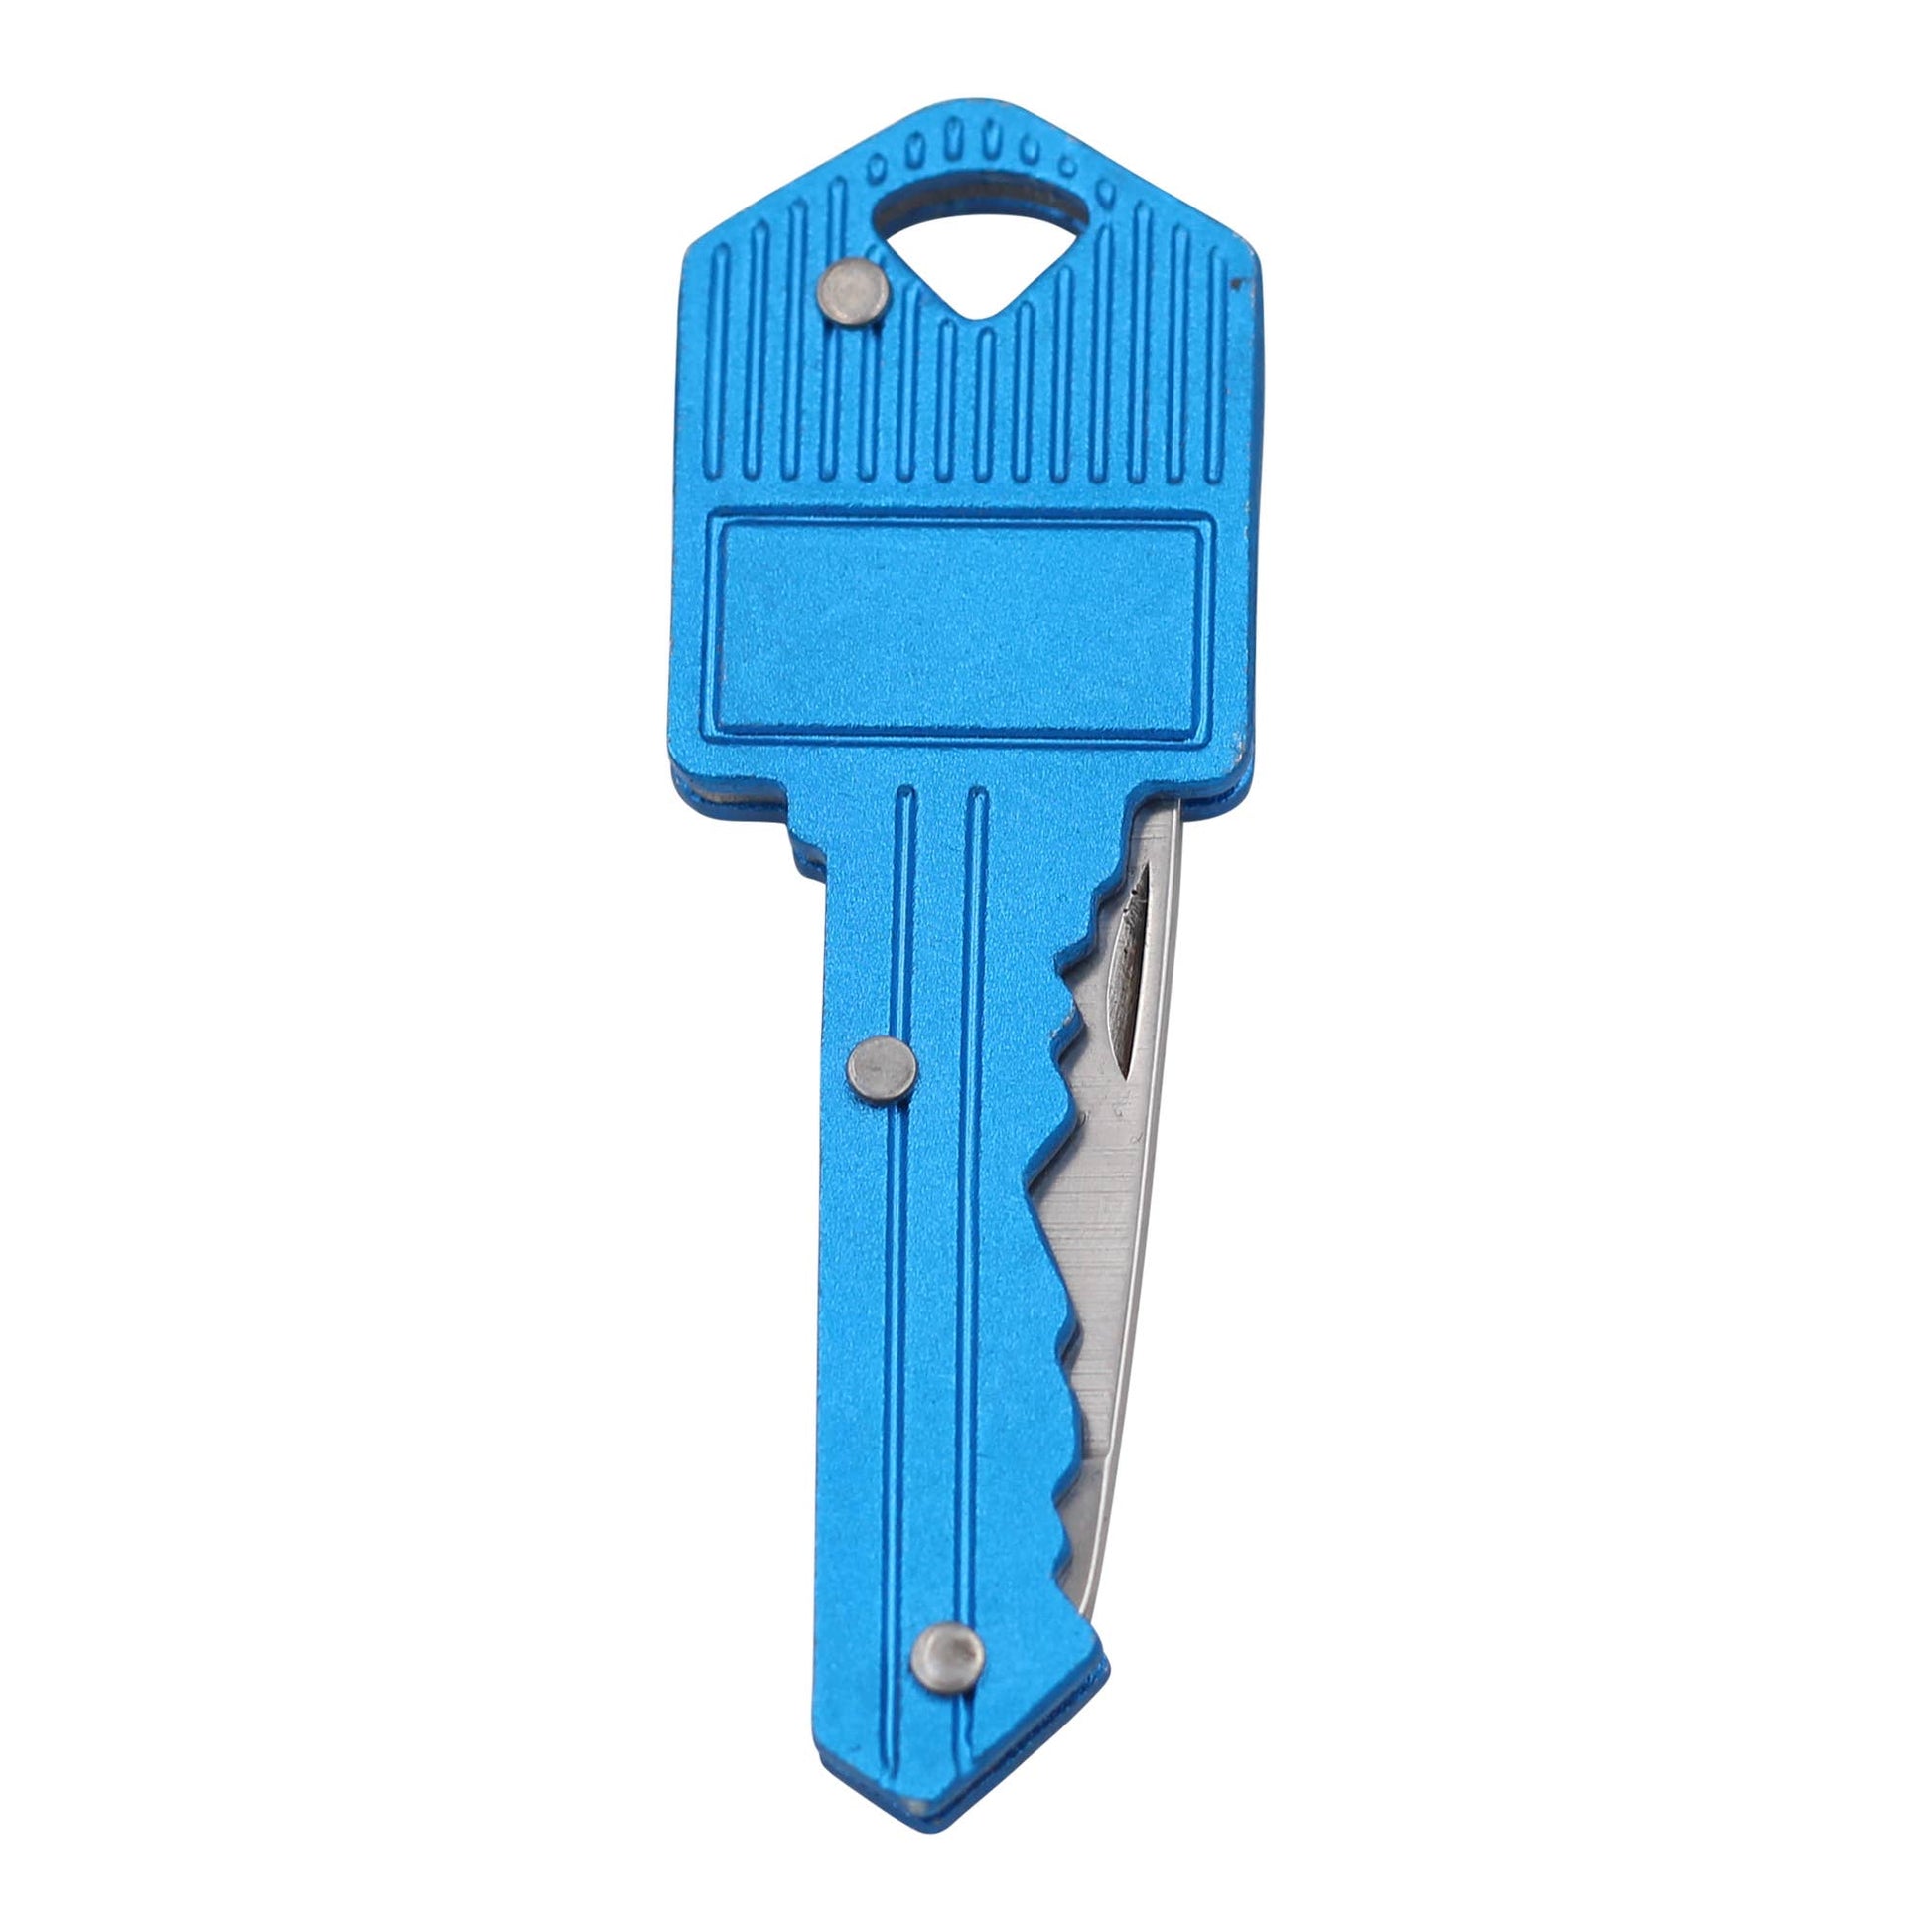 Image of Real Sic Blue Key Knife Keychain – Small Utility Pocketknife - 2'' Blade